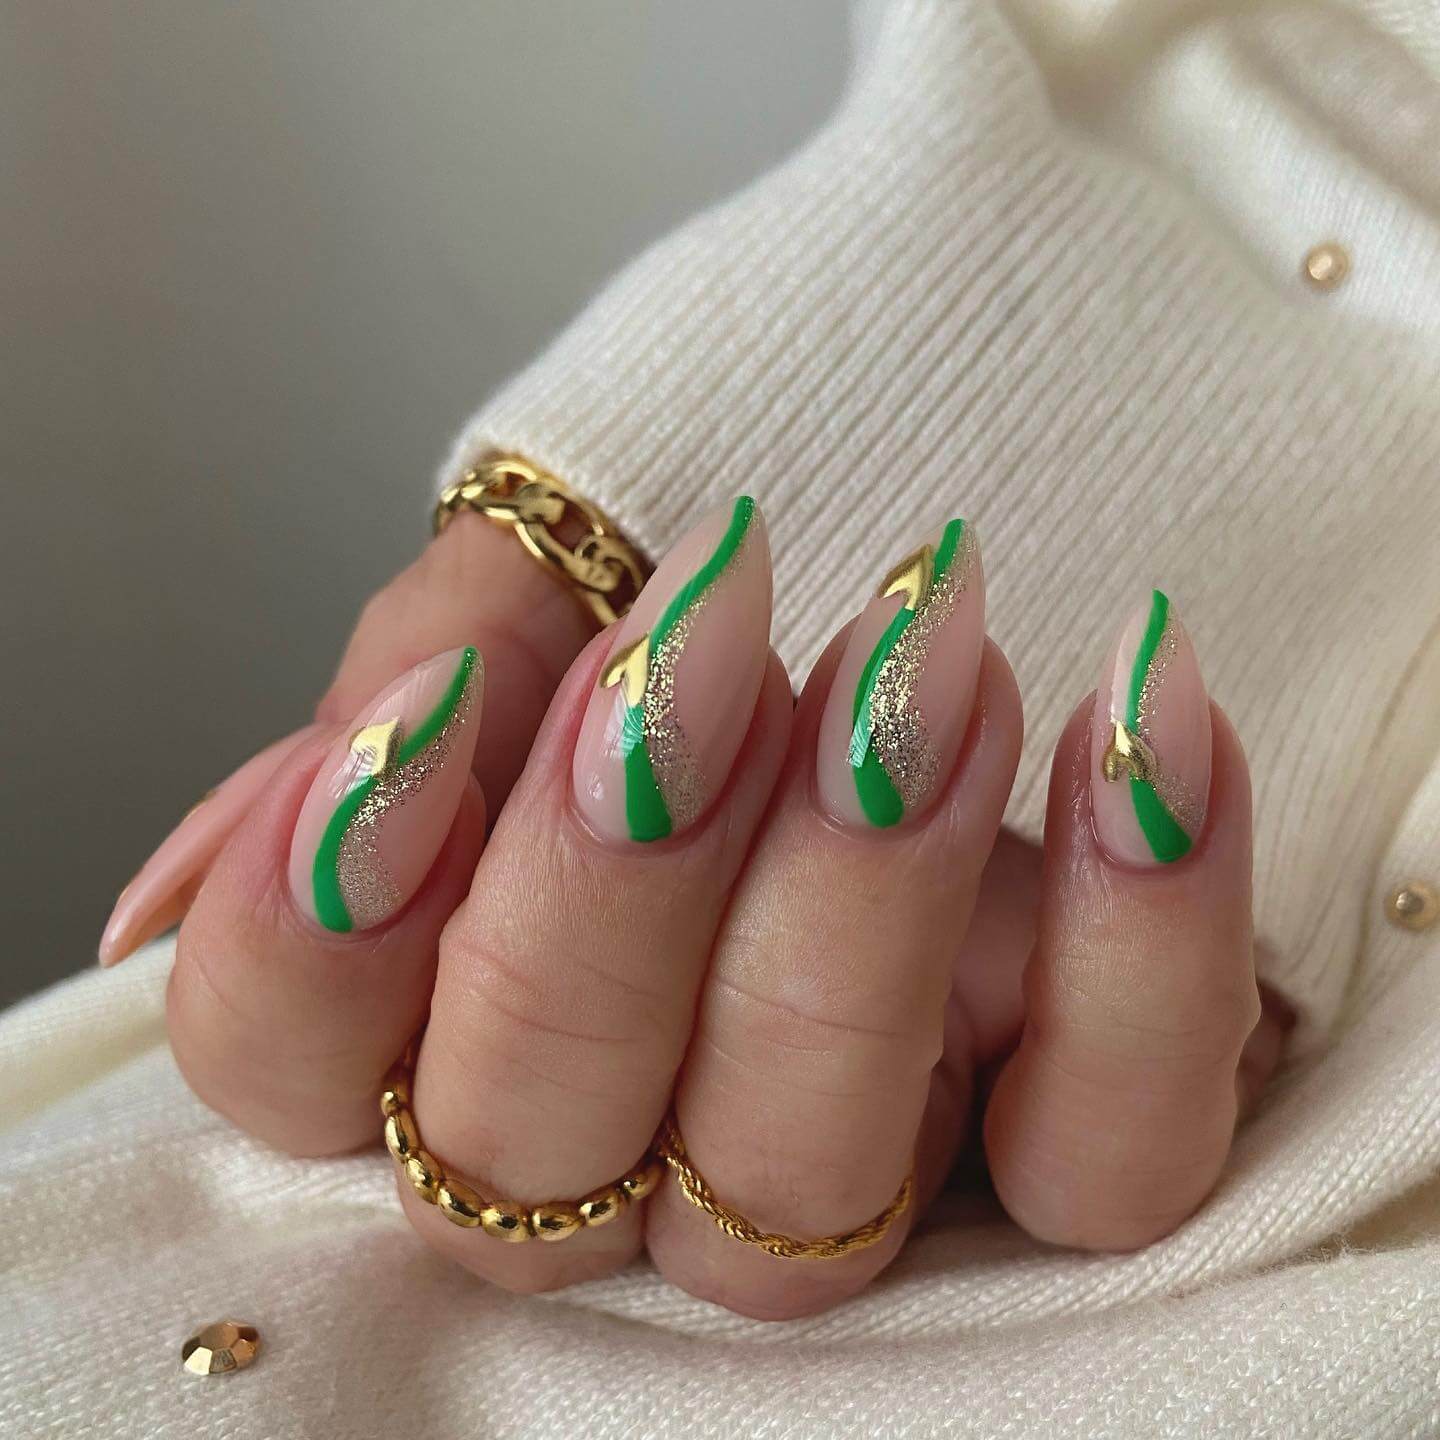 Green Swirl Nail Designs